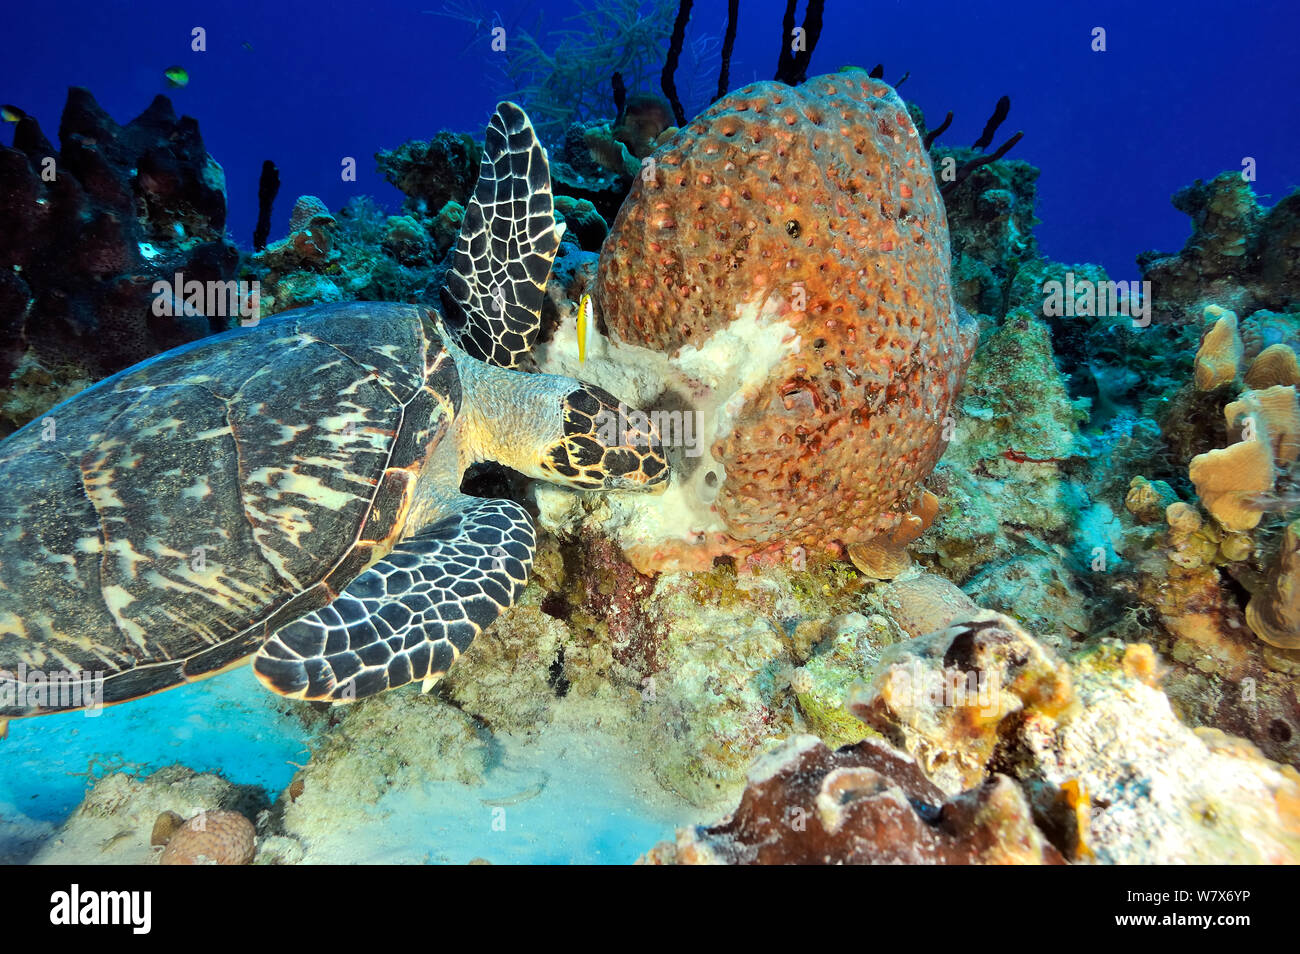 Hawksbill turtle (Eretmochelys imbricata) feeding on a Leathery barrel sponge (Geodia neptuni), San Salvador Island / Colombus Island, Bahamas. Caribbean. Stock Photo